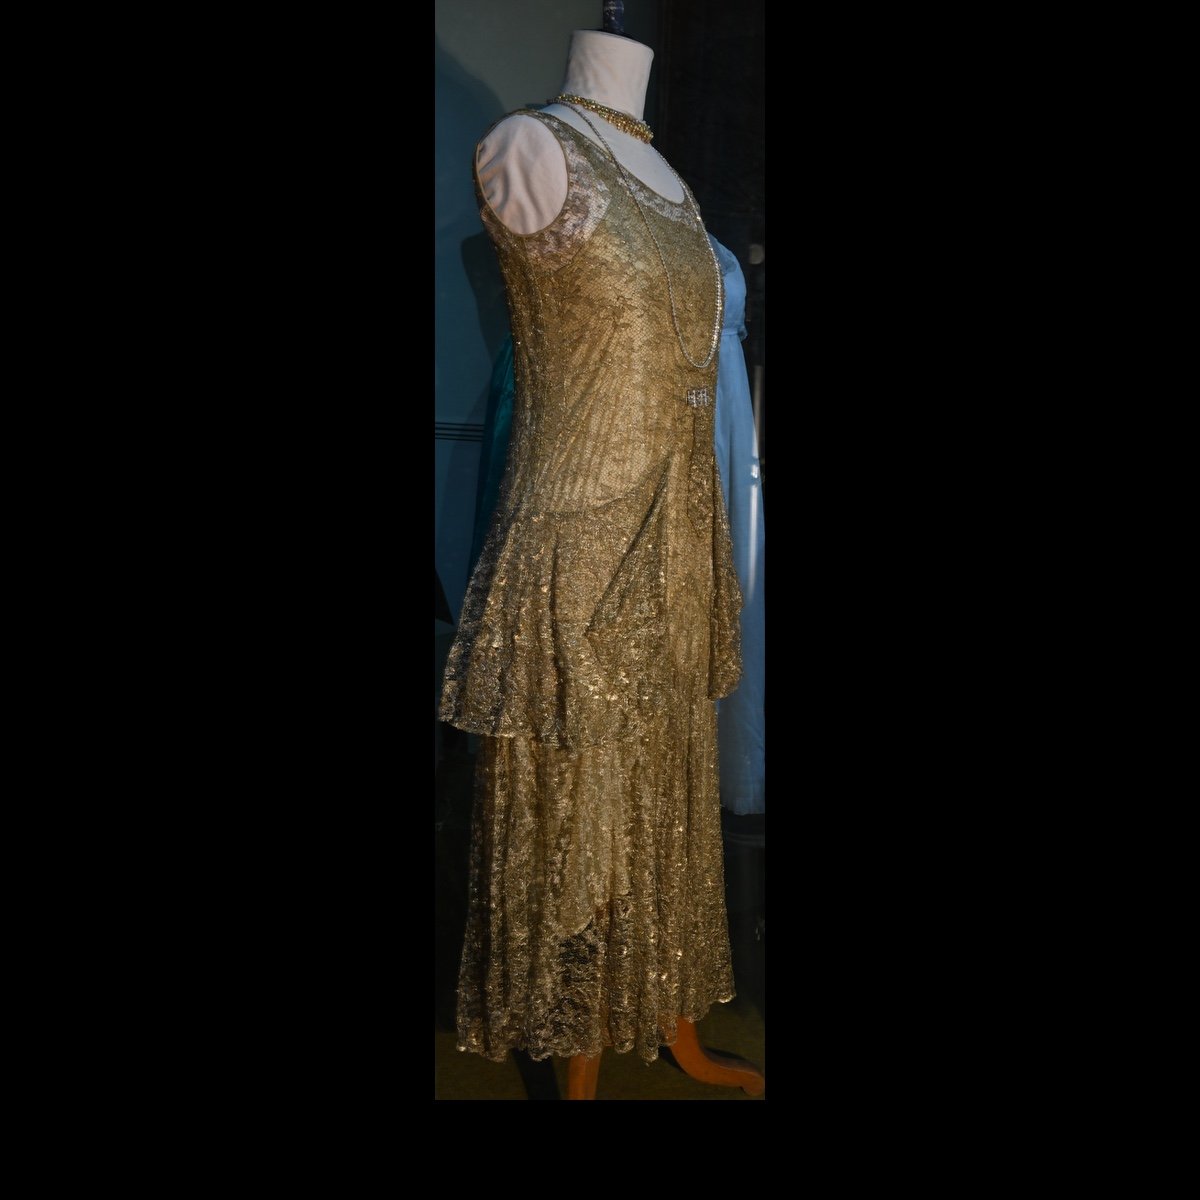 c.1930 Evening dress